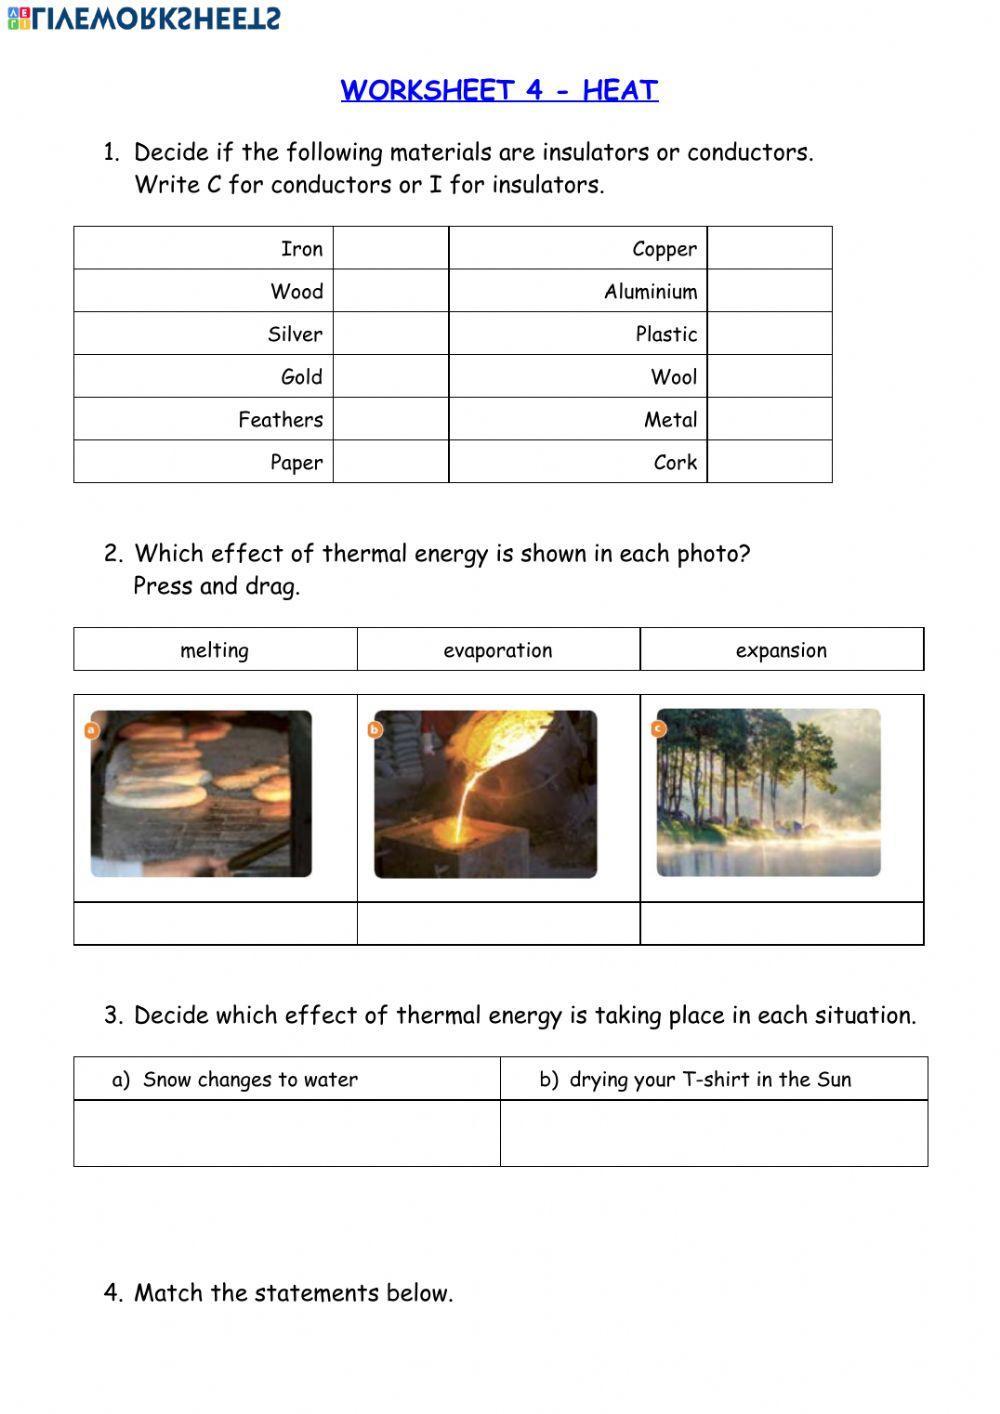 Heat-Thermal energy